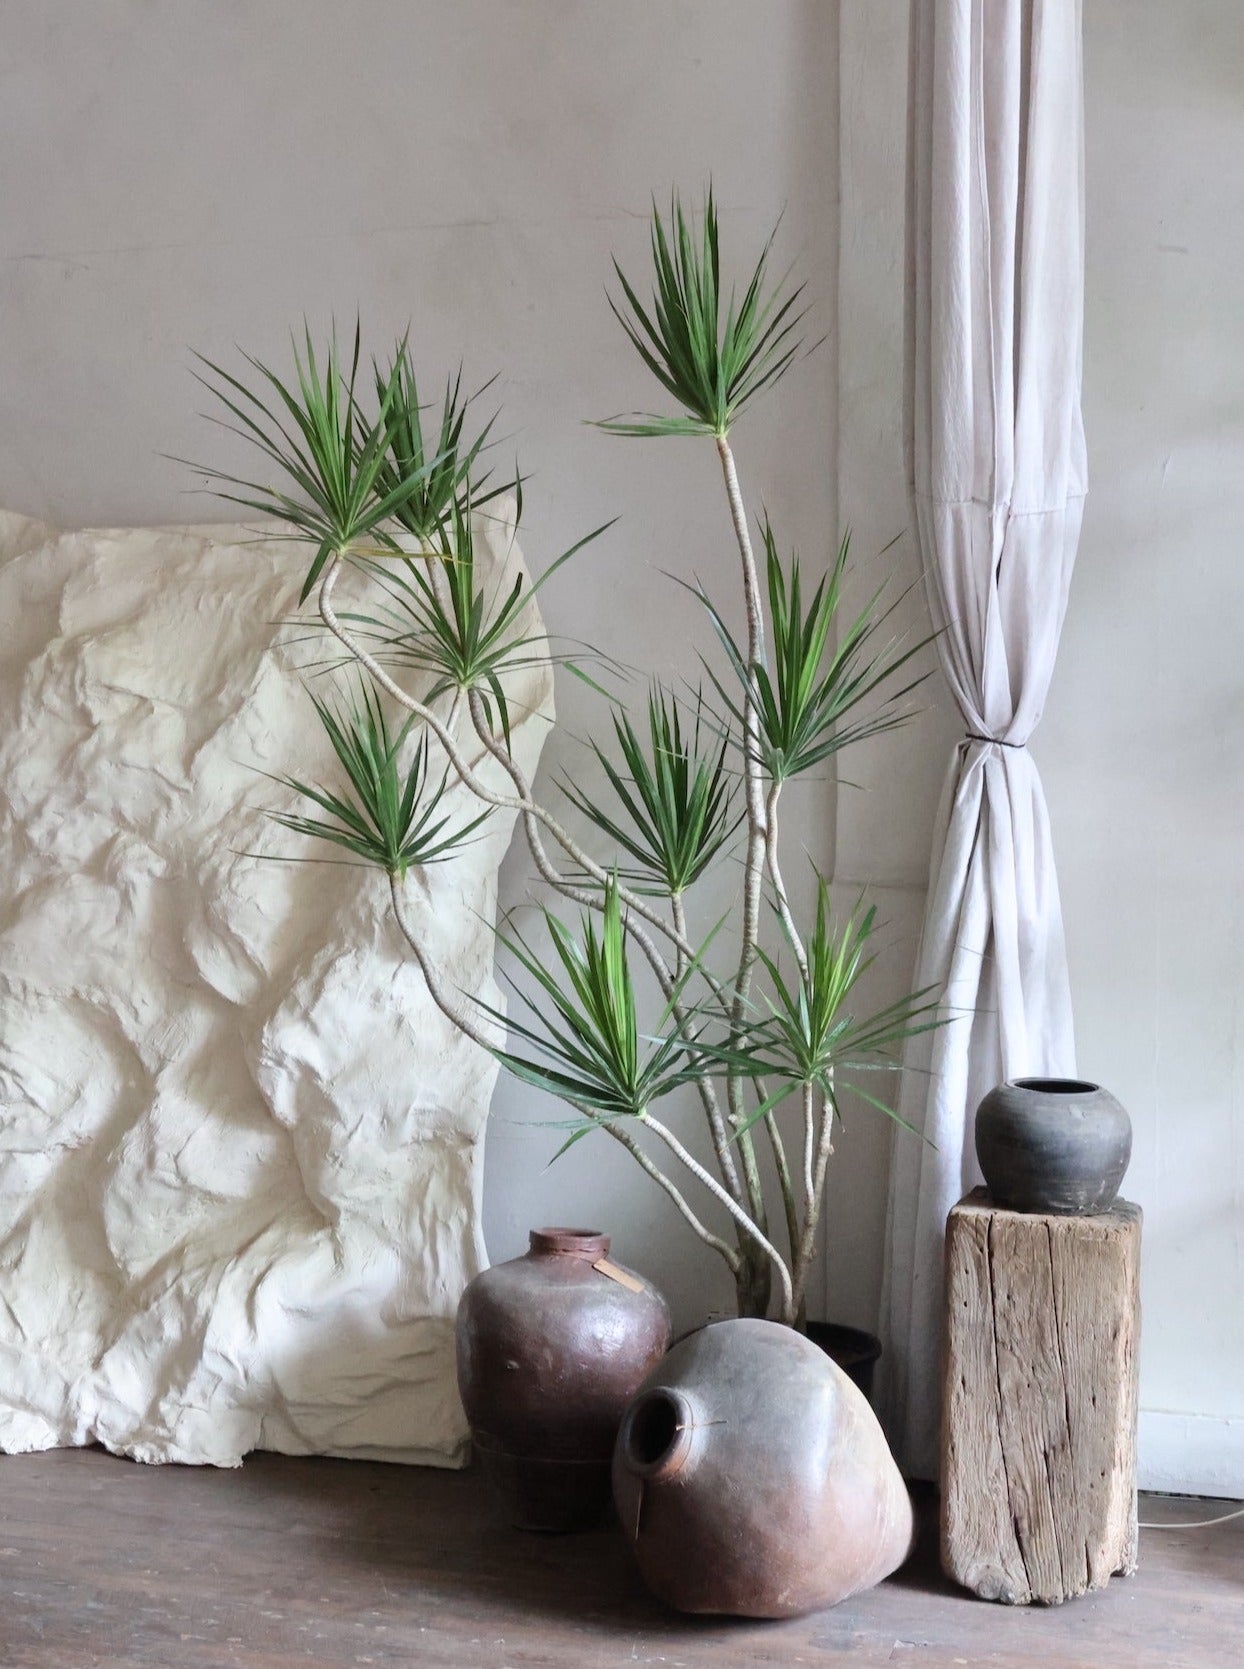 Dracaena marginata is one of the best interior plants